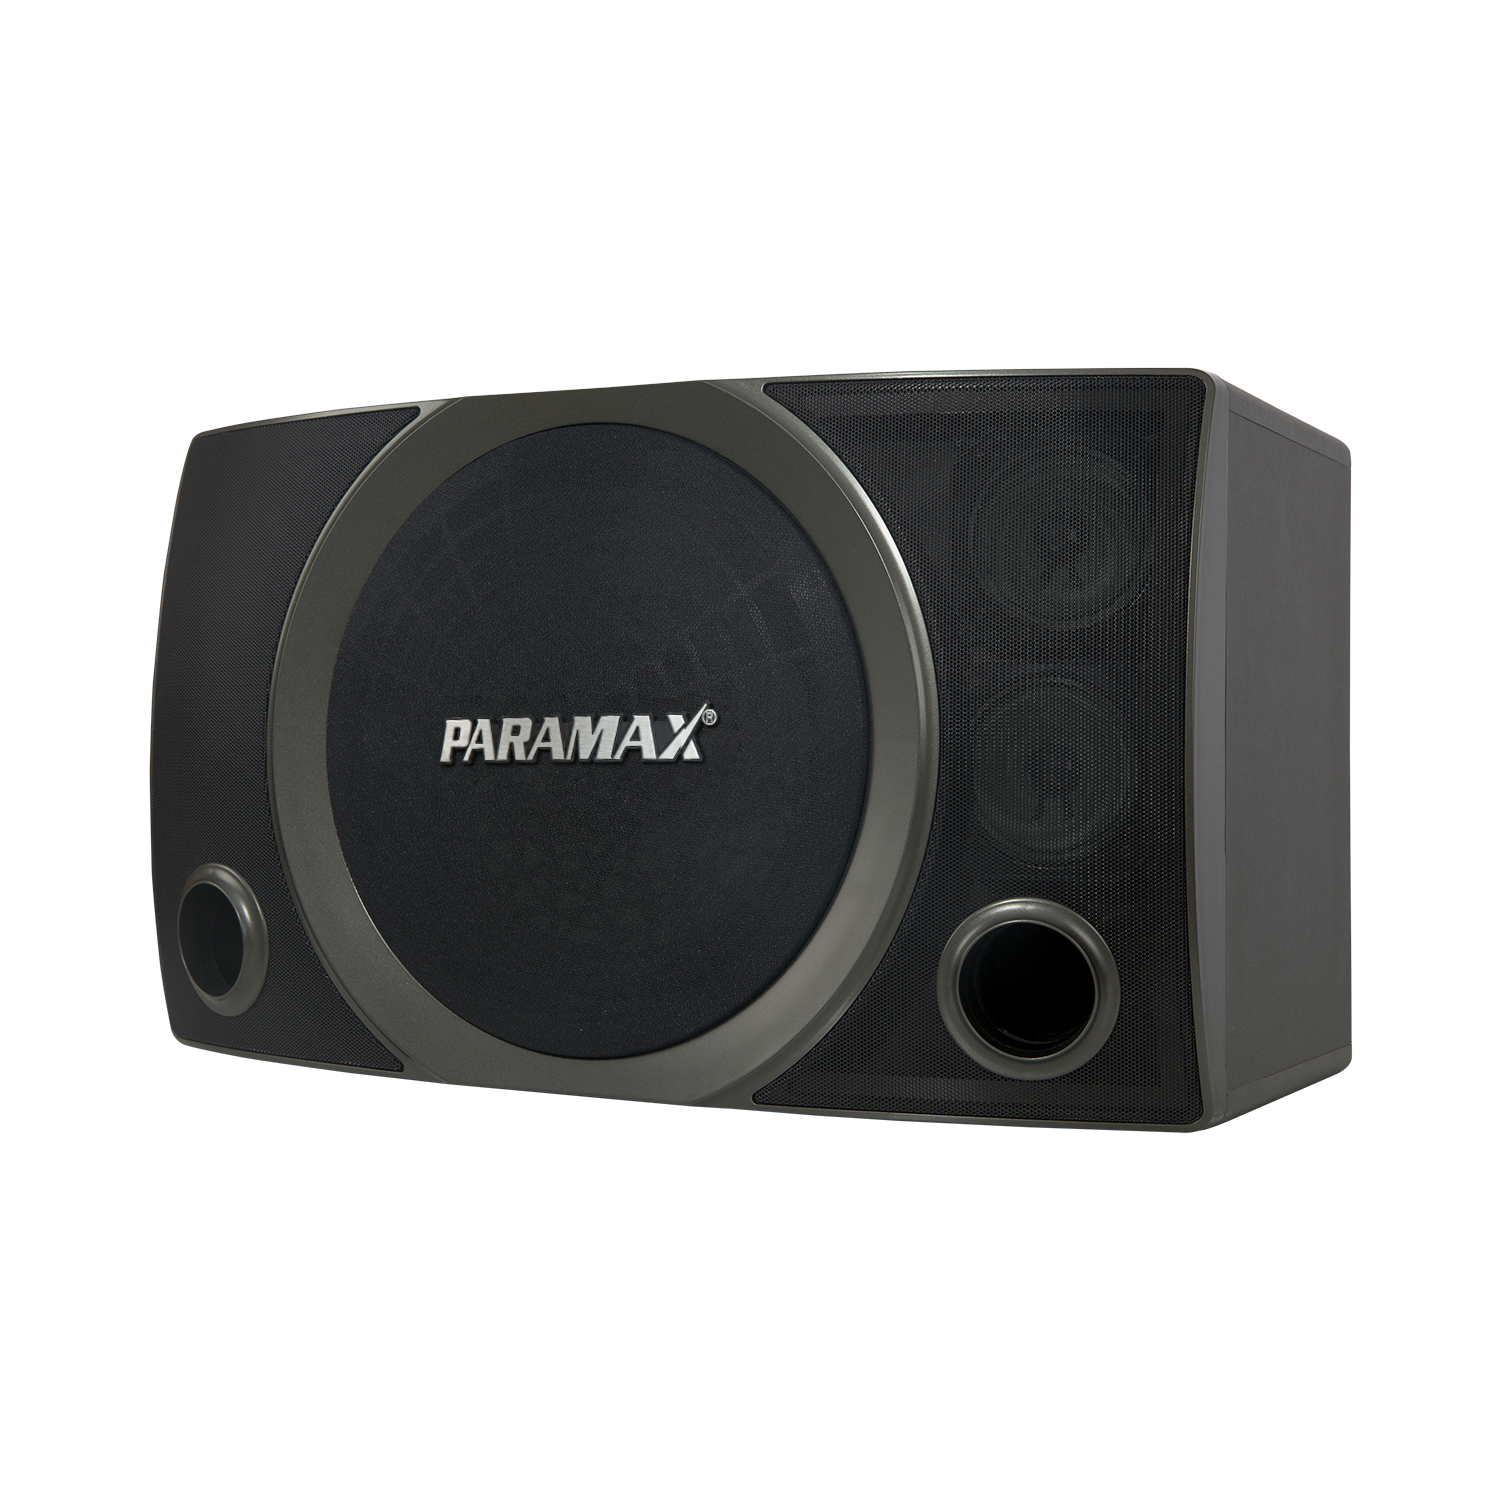 Loa Paramax SC-3500 New (Đen)